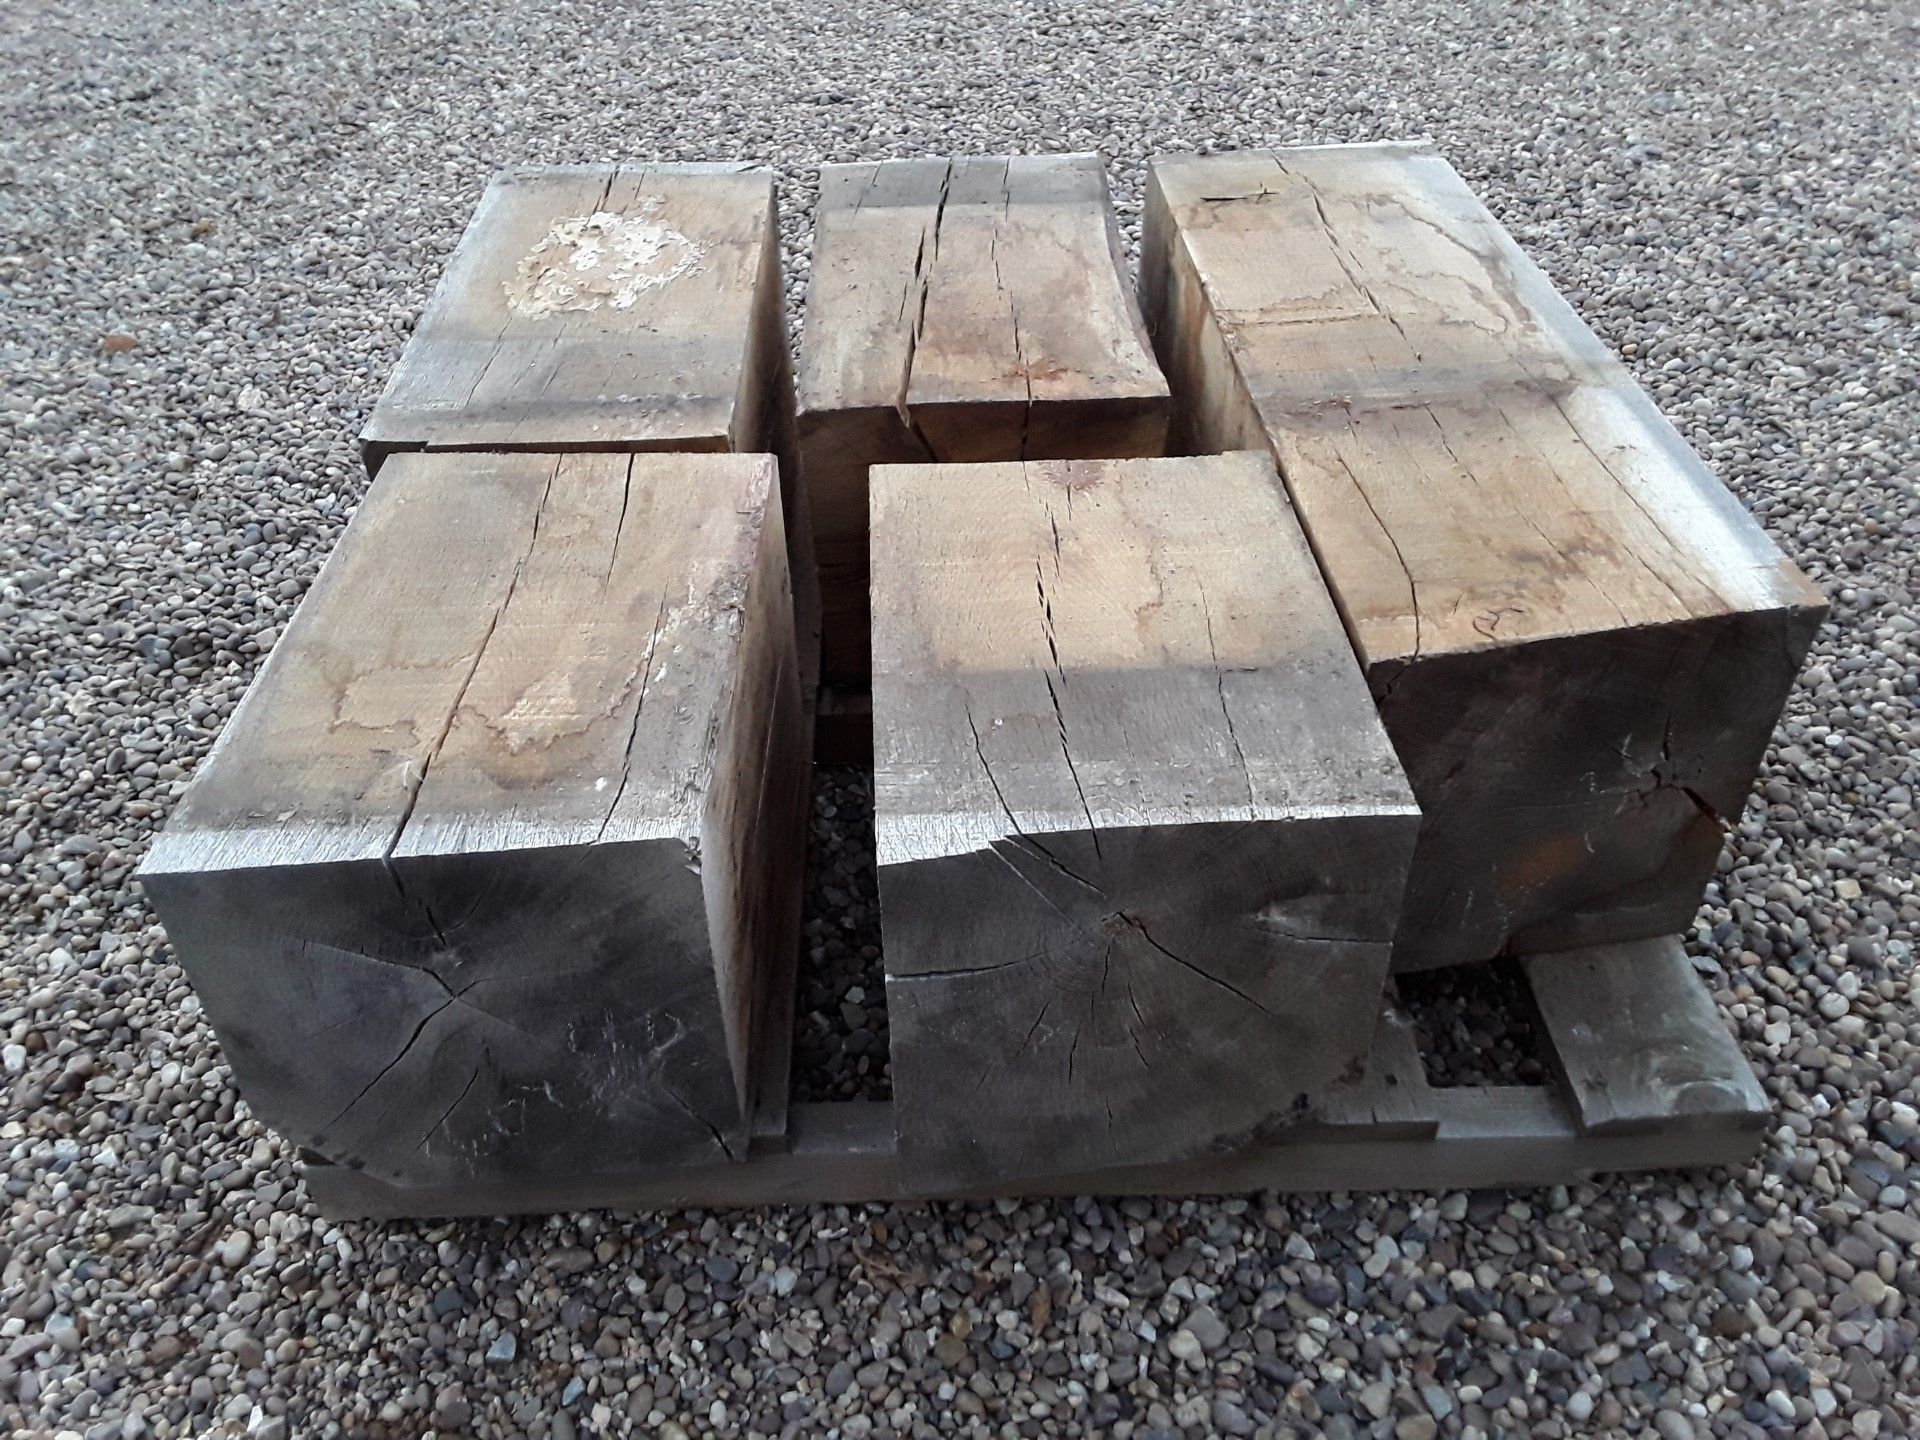 4 x Hardwood Air Dried Sawn English Oak Blocks / Beams - Image 2 of 3